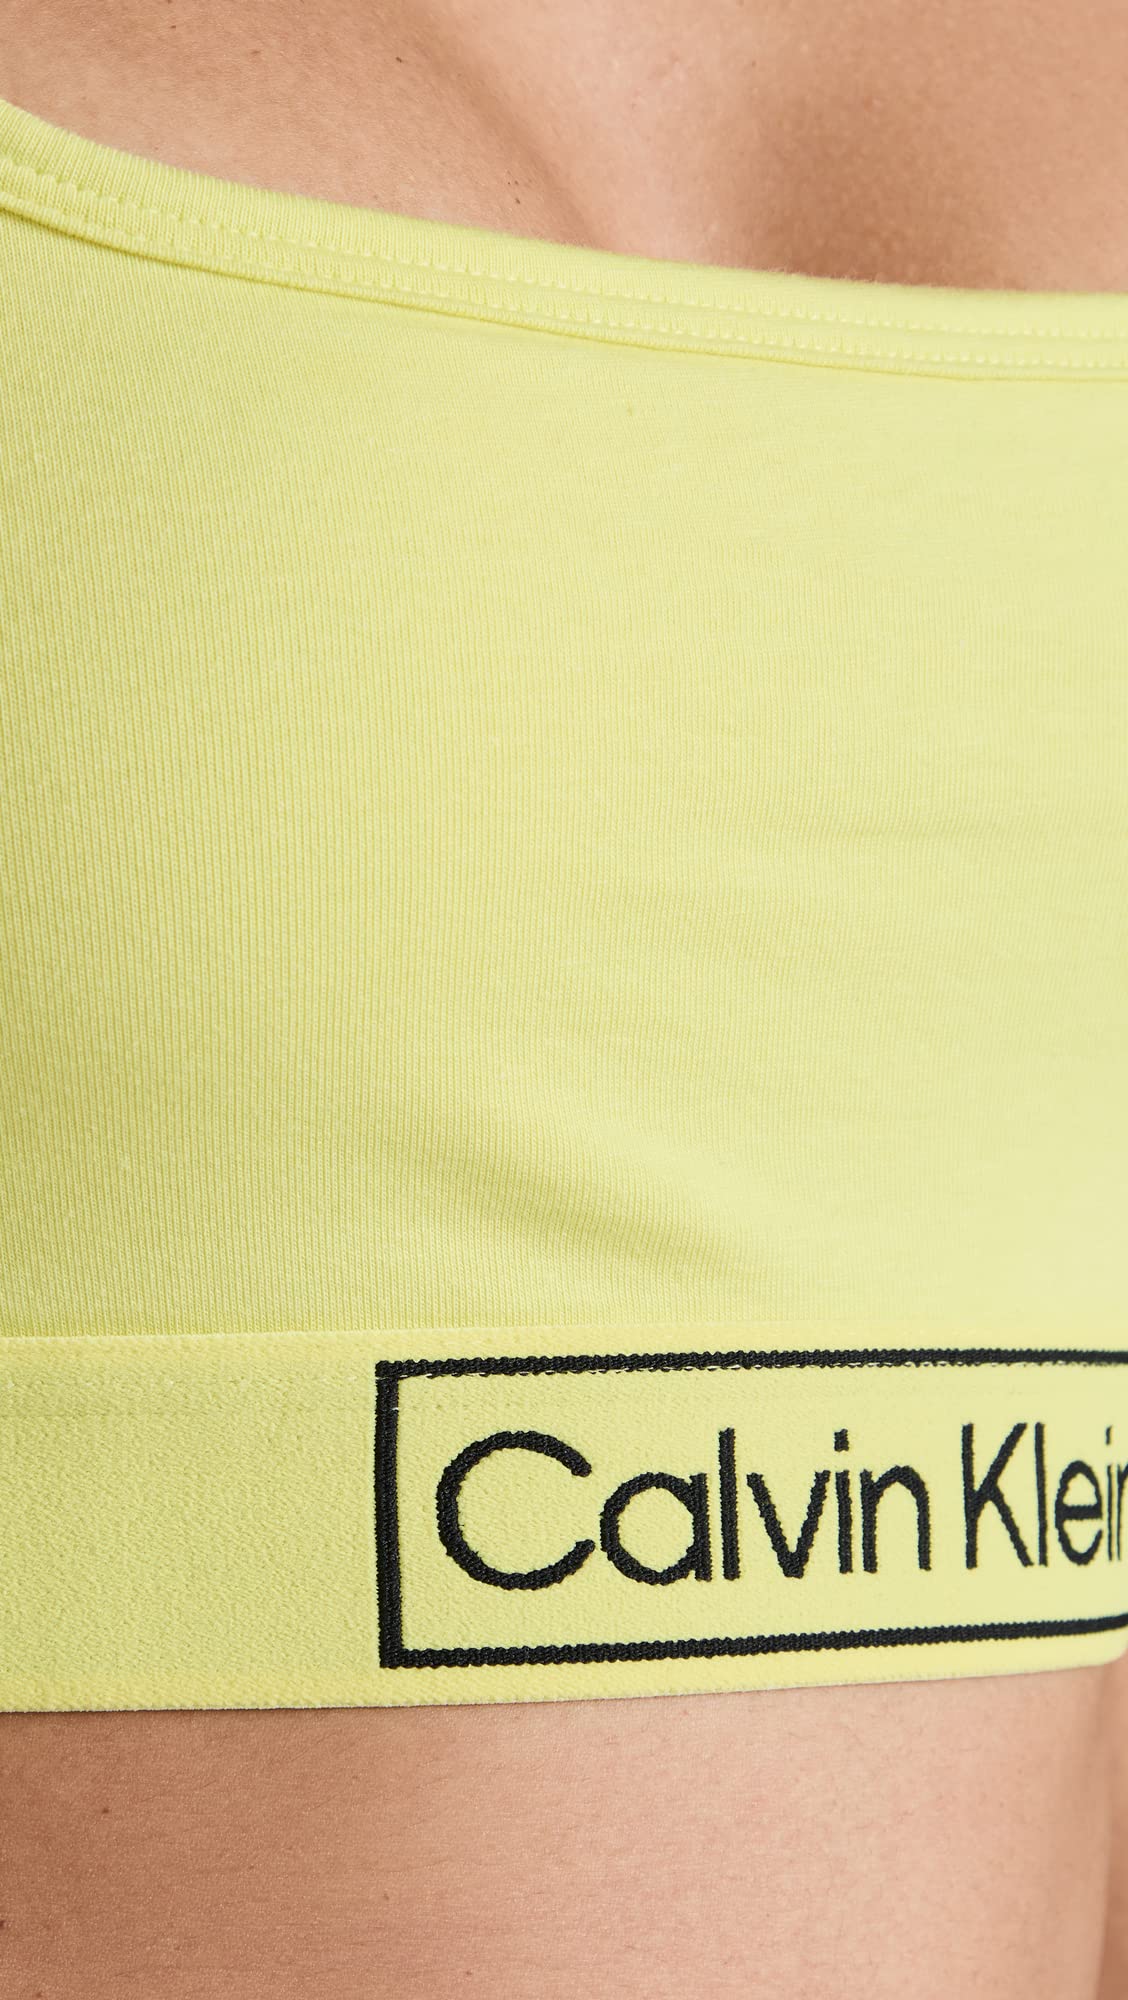 Calvin Klein Women's Reimagined Heritage Unlined Bralette